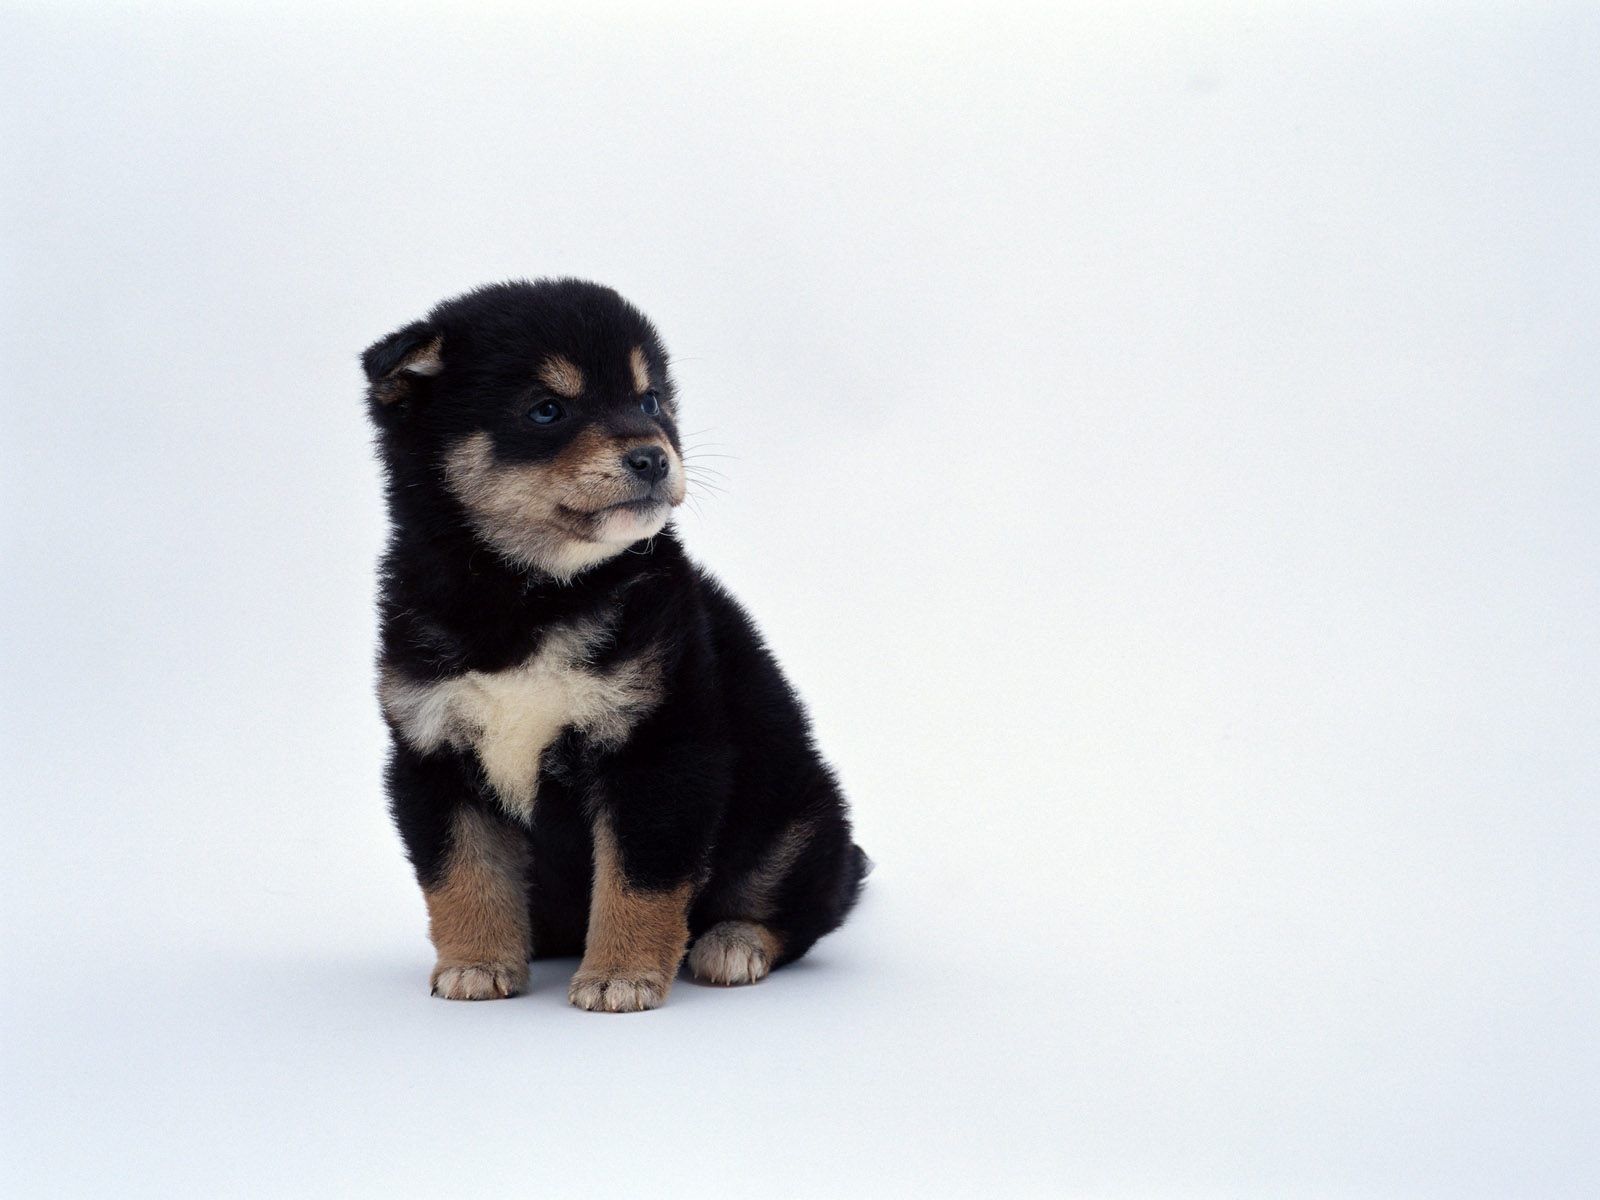 Adorable puppy on a high-resolution desktop wallpaper